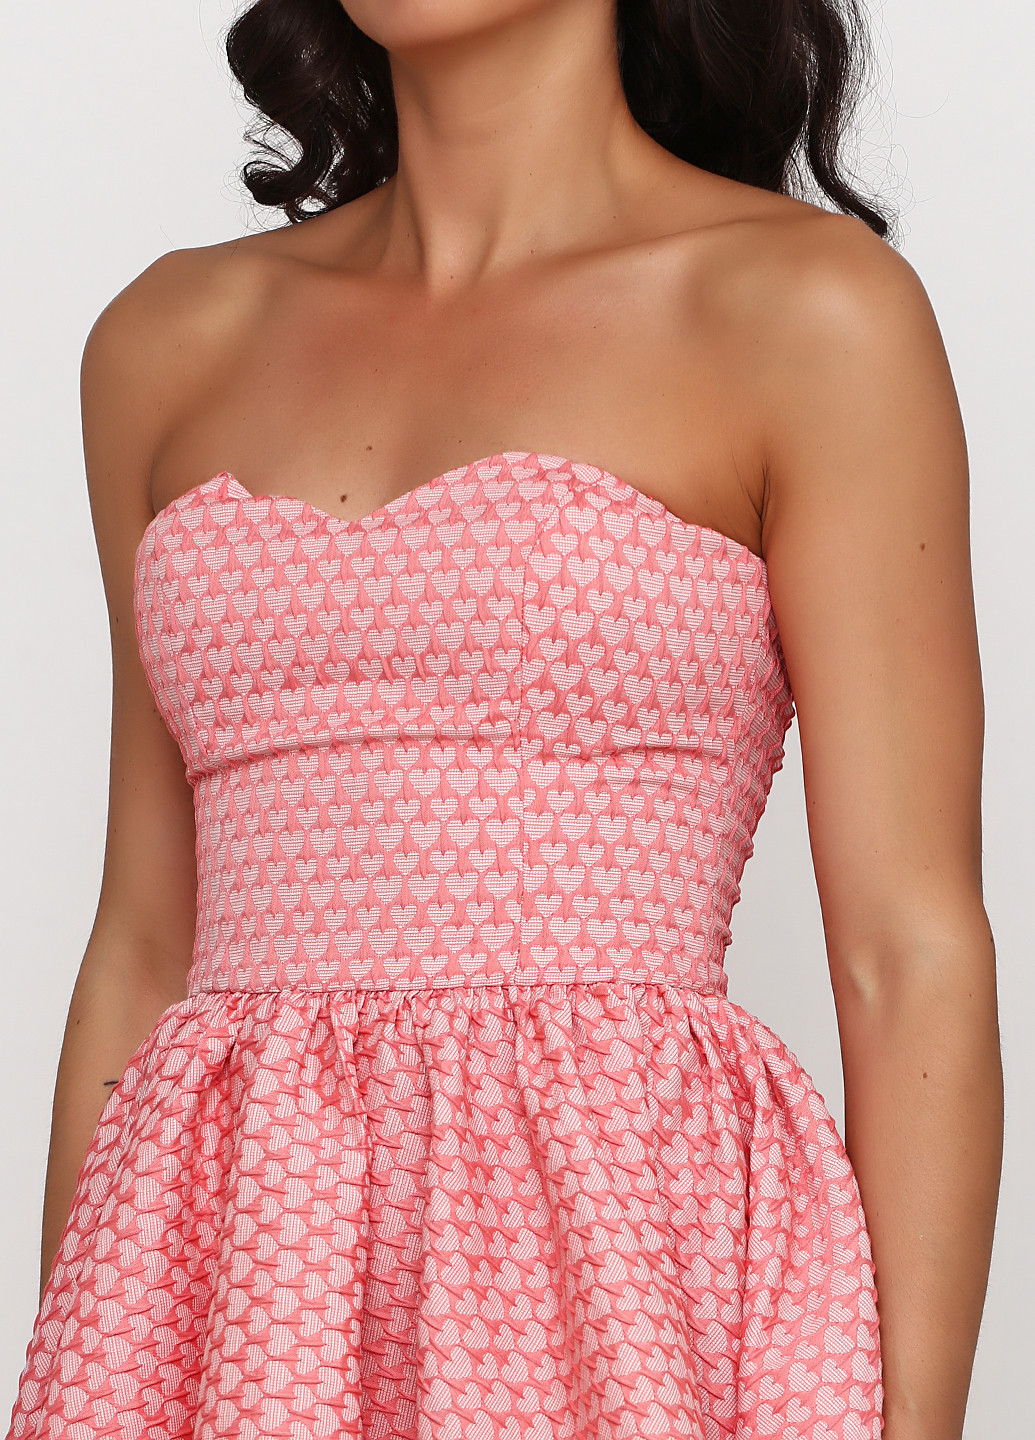 Розовое коктейльное платье бэби долл My Own Dress сердечки